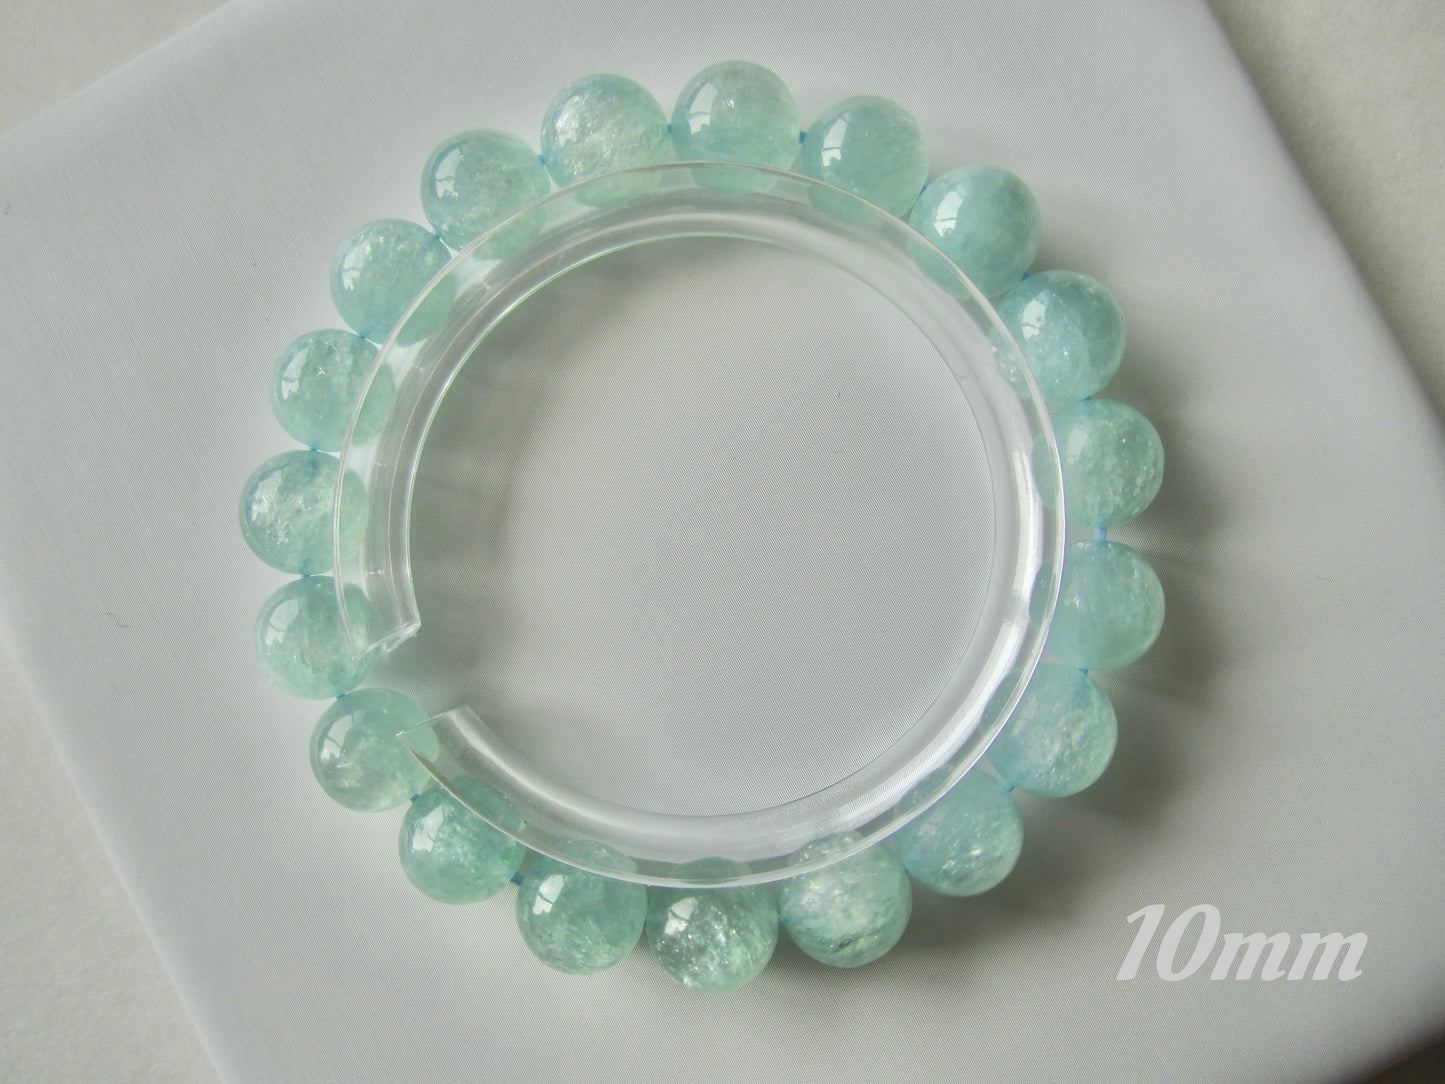 [Bracelet] A Touch of Tranquility: Blue-Green Lepidolite 蓝绿祖母晶 Bracelet